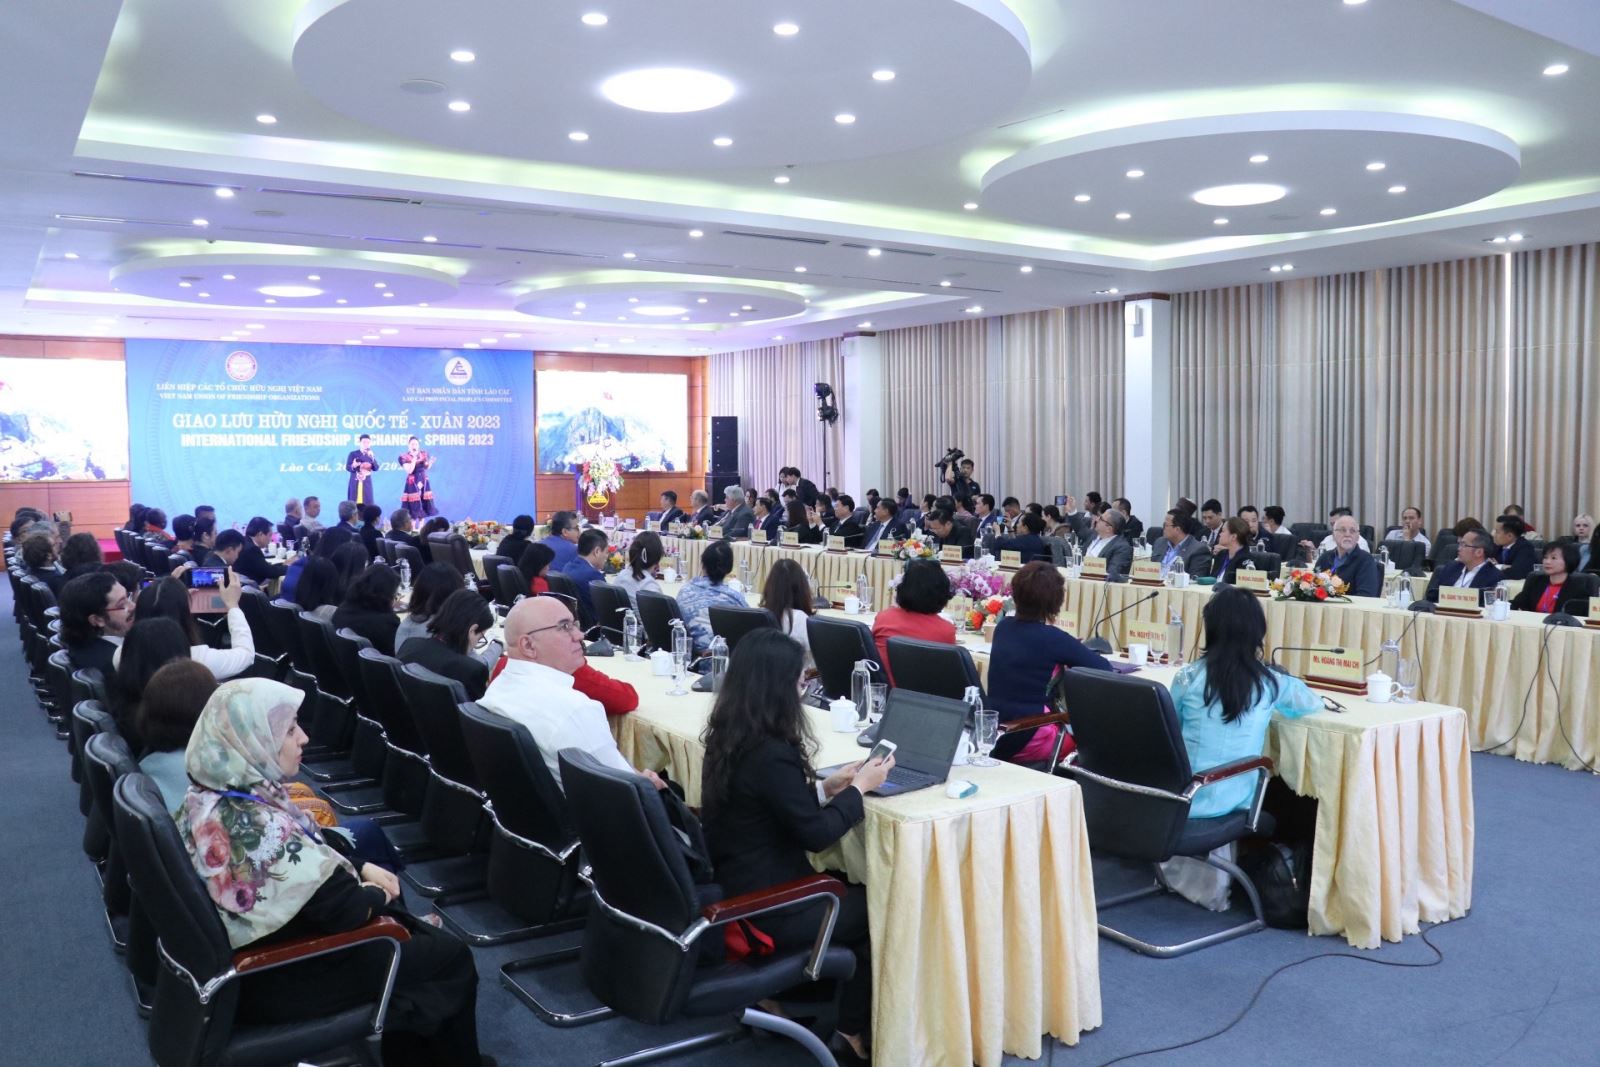 The 2023 International Friendship Exchange Program in Lào Cai province